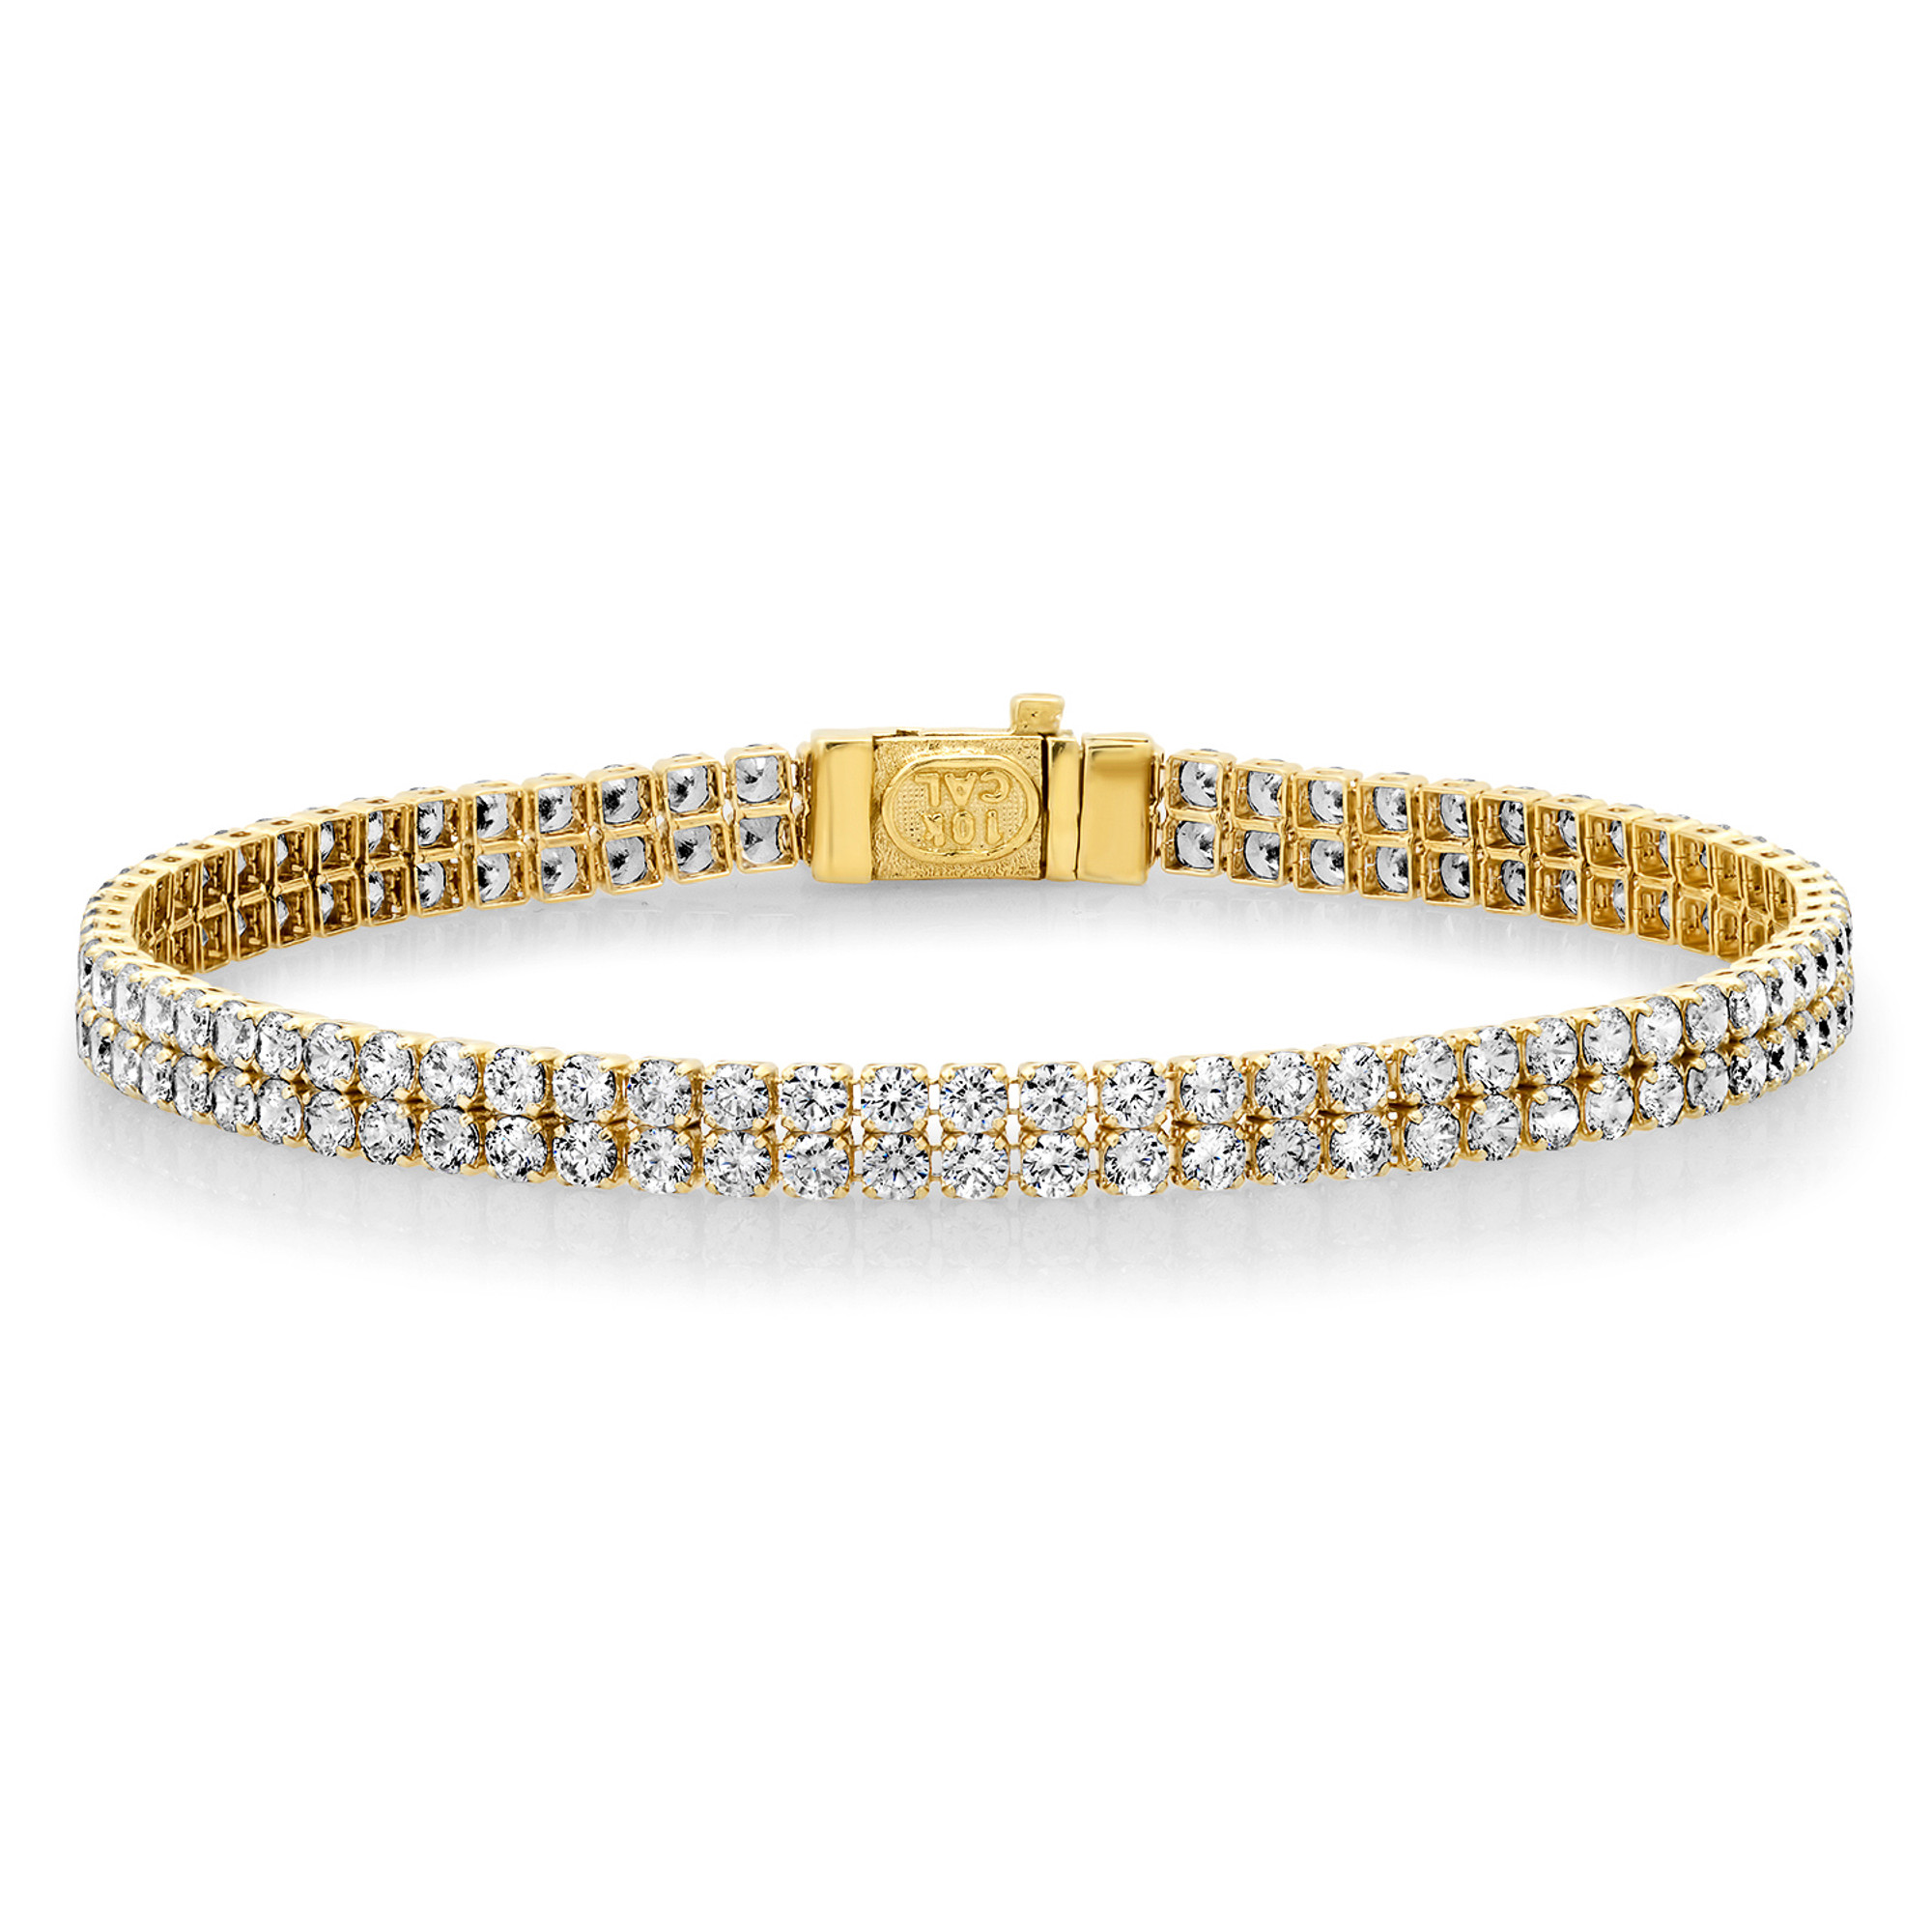 10K YELLOW GOLD 5 CWT DIAMOND BRACELET - NWOT - jewelry - by owner - sale -  craigslist